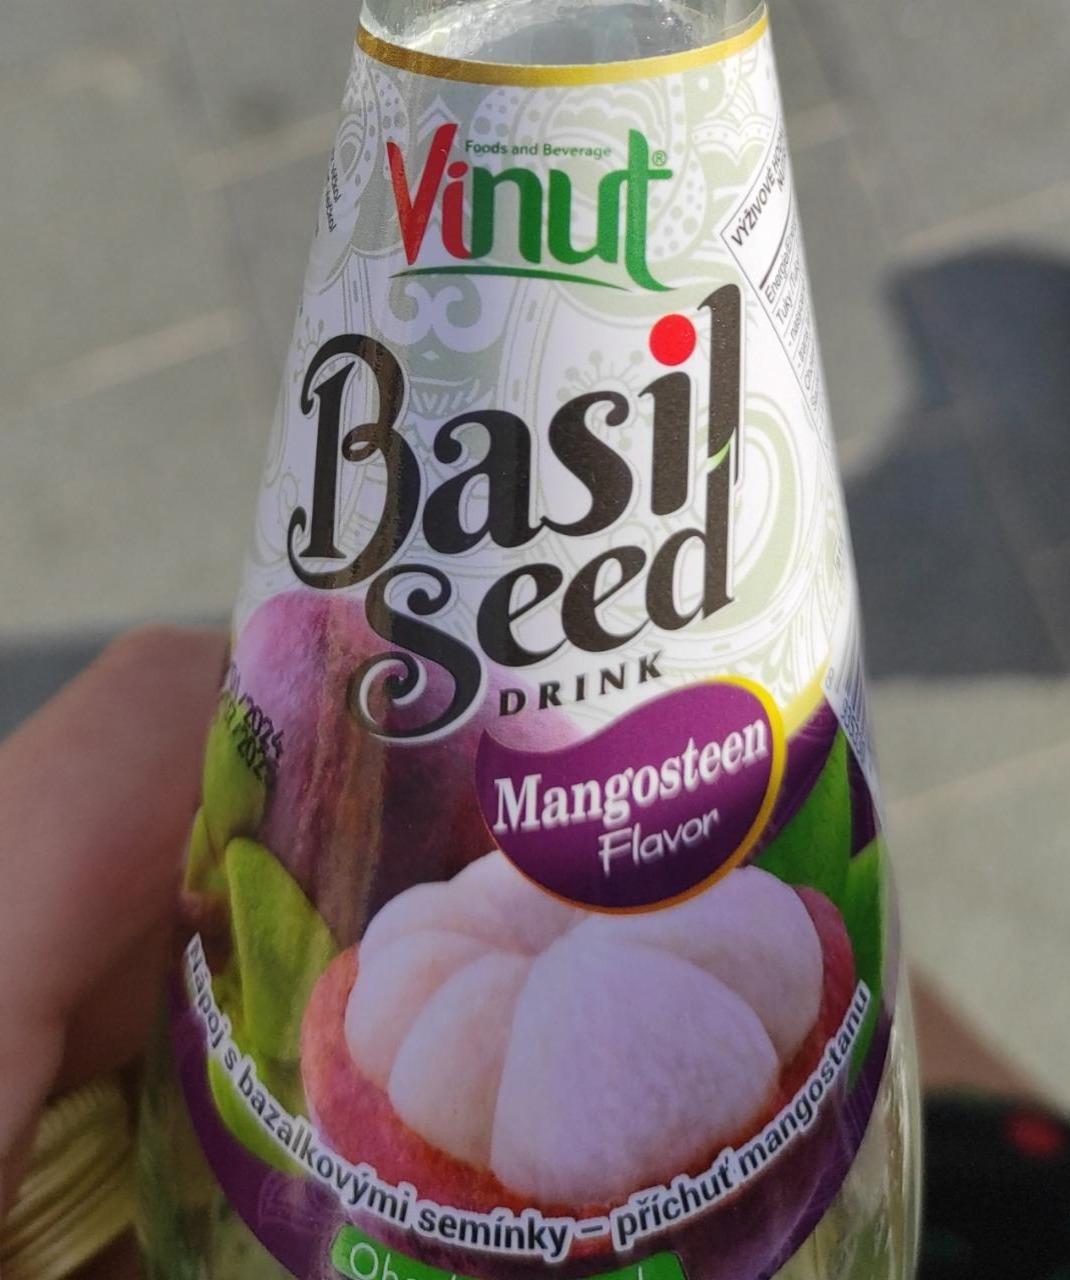 Fotografie - Basil seed drink mangosteen flavor Vinut